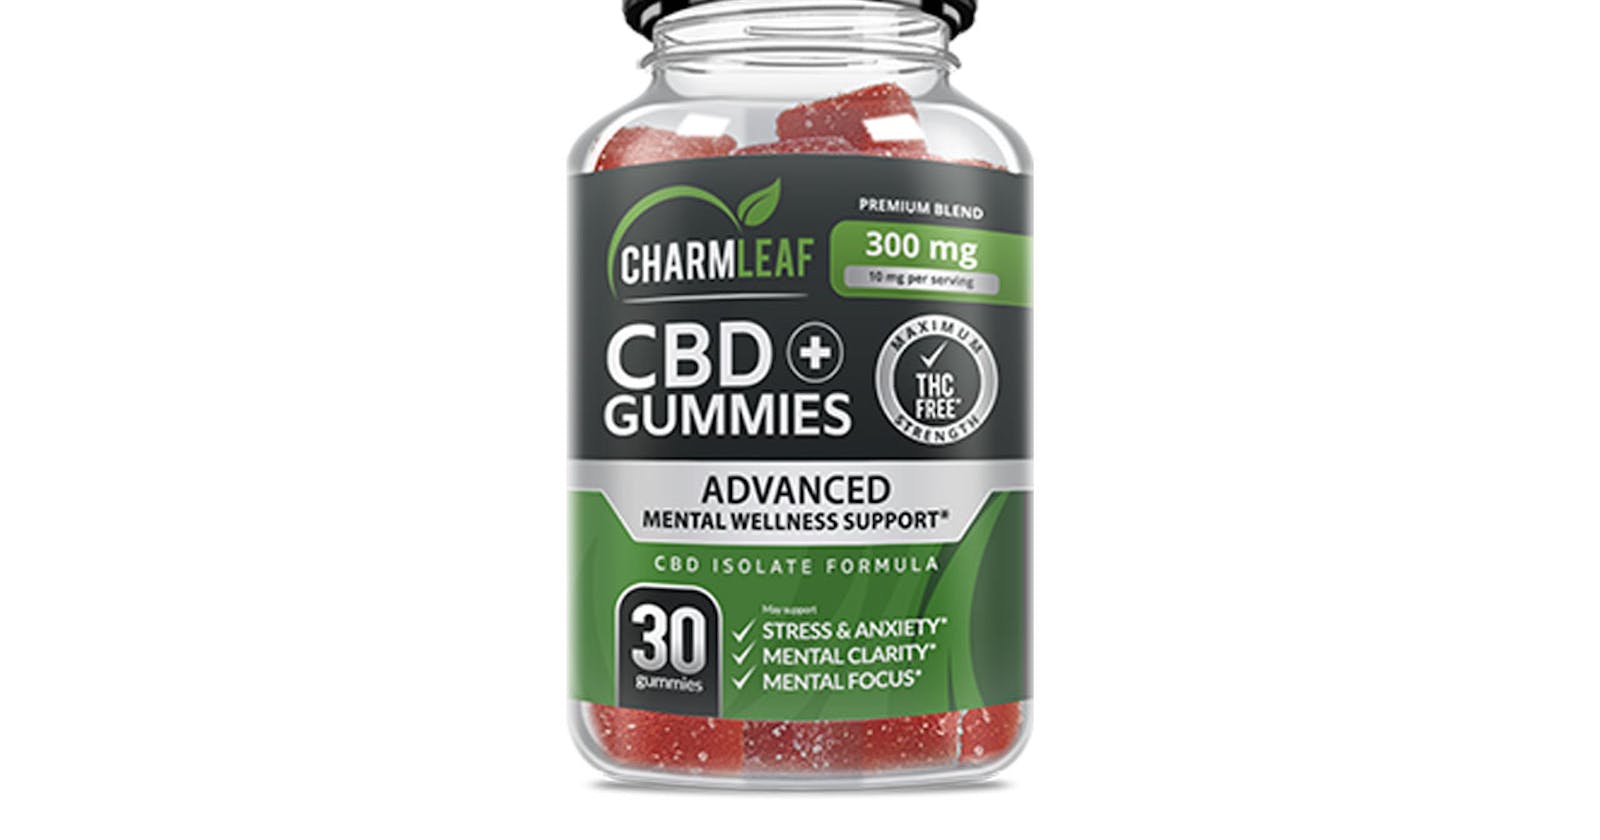 CharmLeaf CBD Gummies Reviews Scam Alert! Don’t Take Before Know This